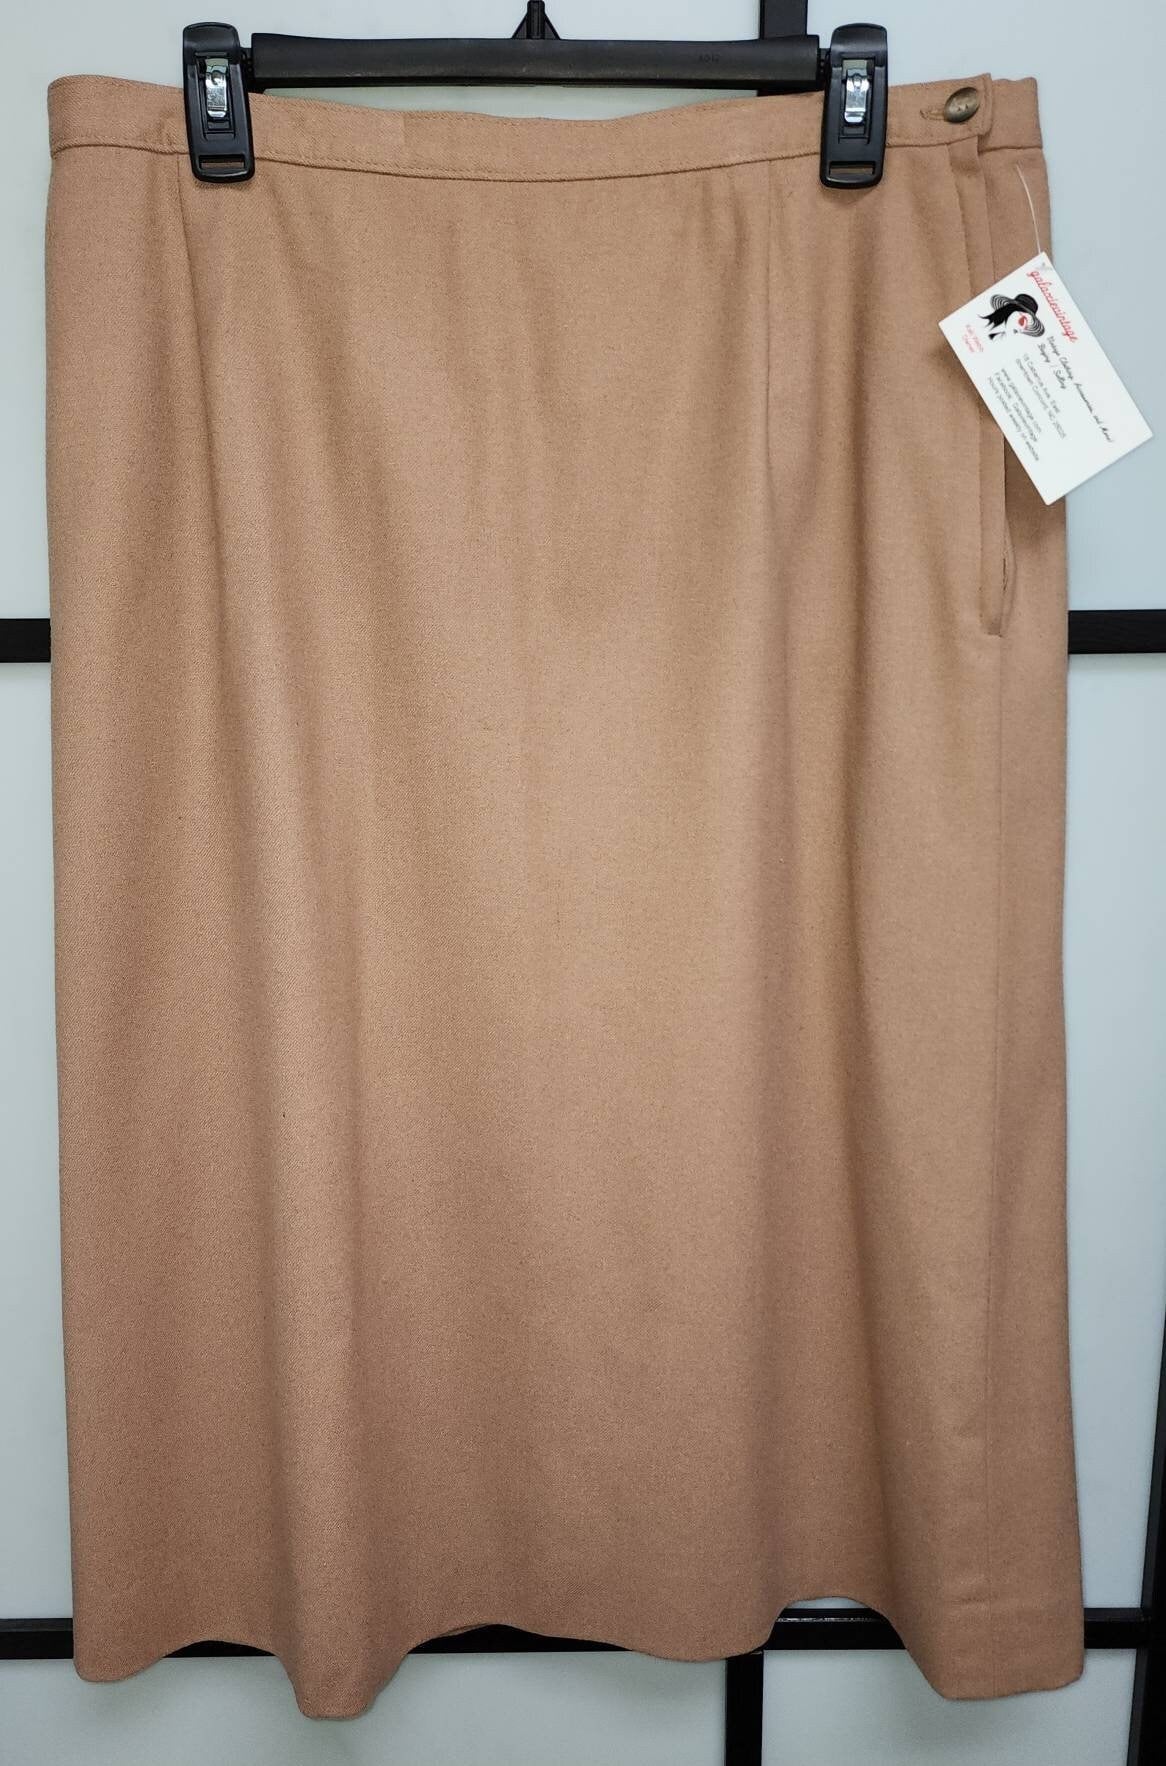 Vintage Wool Skirt 1990s Pendleton Plus Size Tan Wool Pencil Skirt Straight Skirt Rockabilly Pinup XL 2 sm moth holes